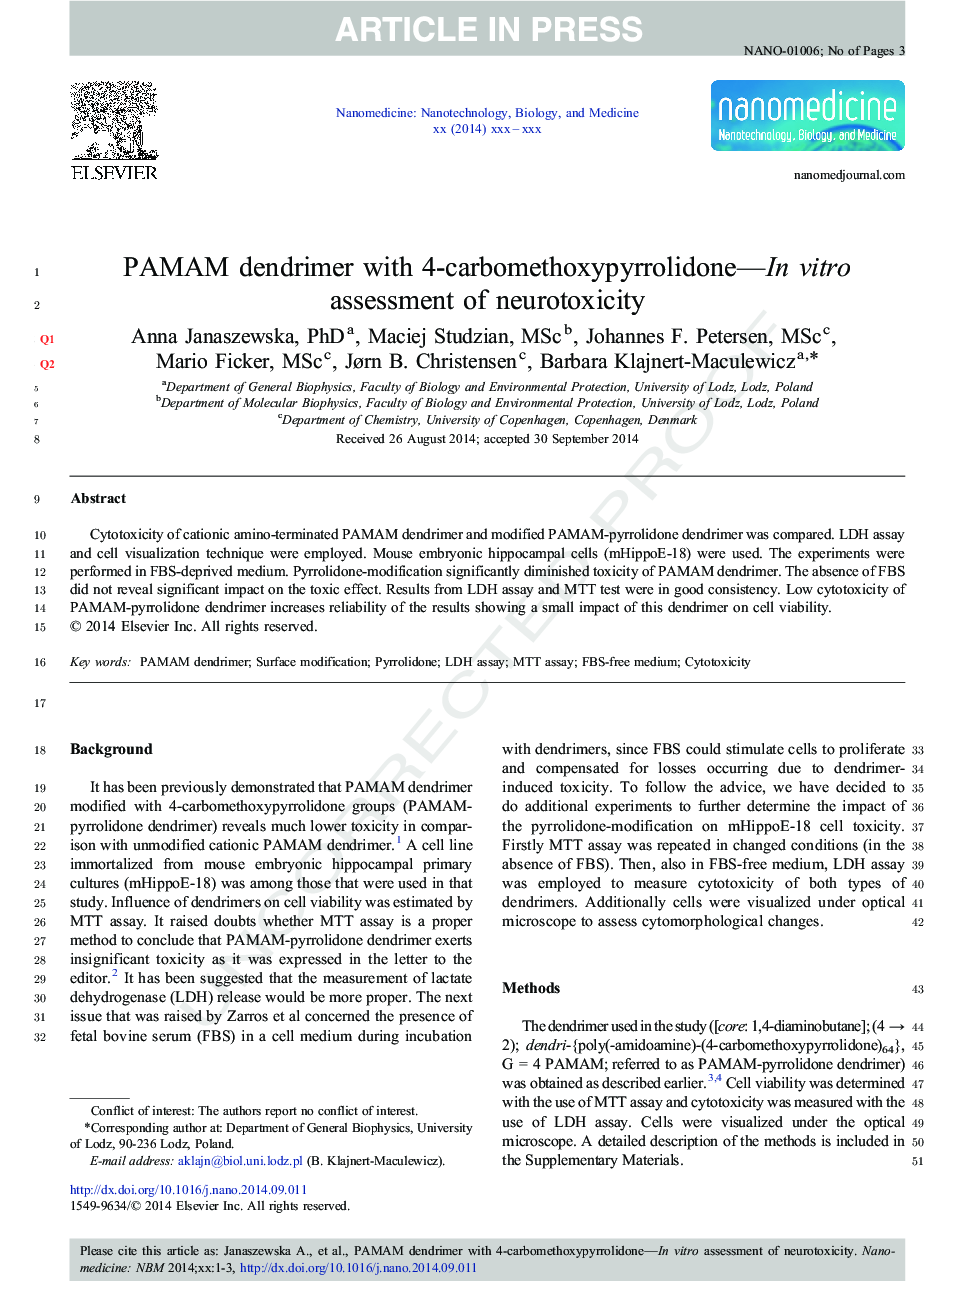 PAMAM dendrimer with 4-carbomethoxypyrrolidone-In vitro assessment of neurotoxicity